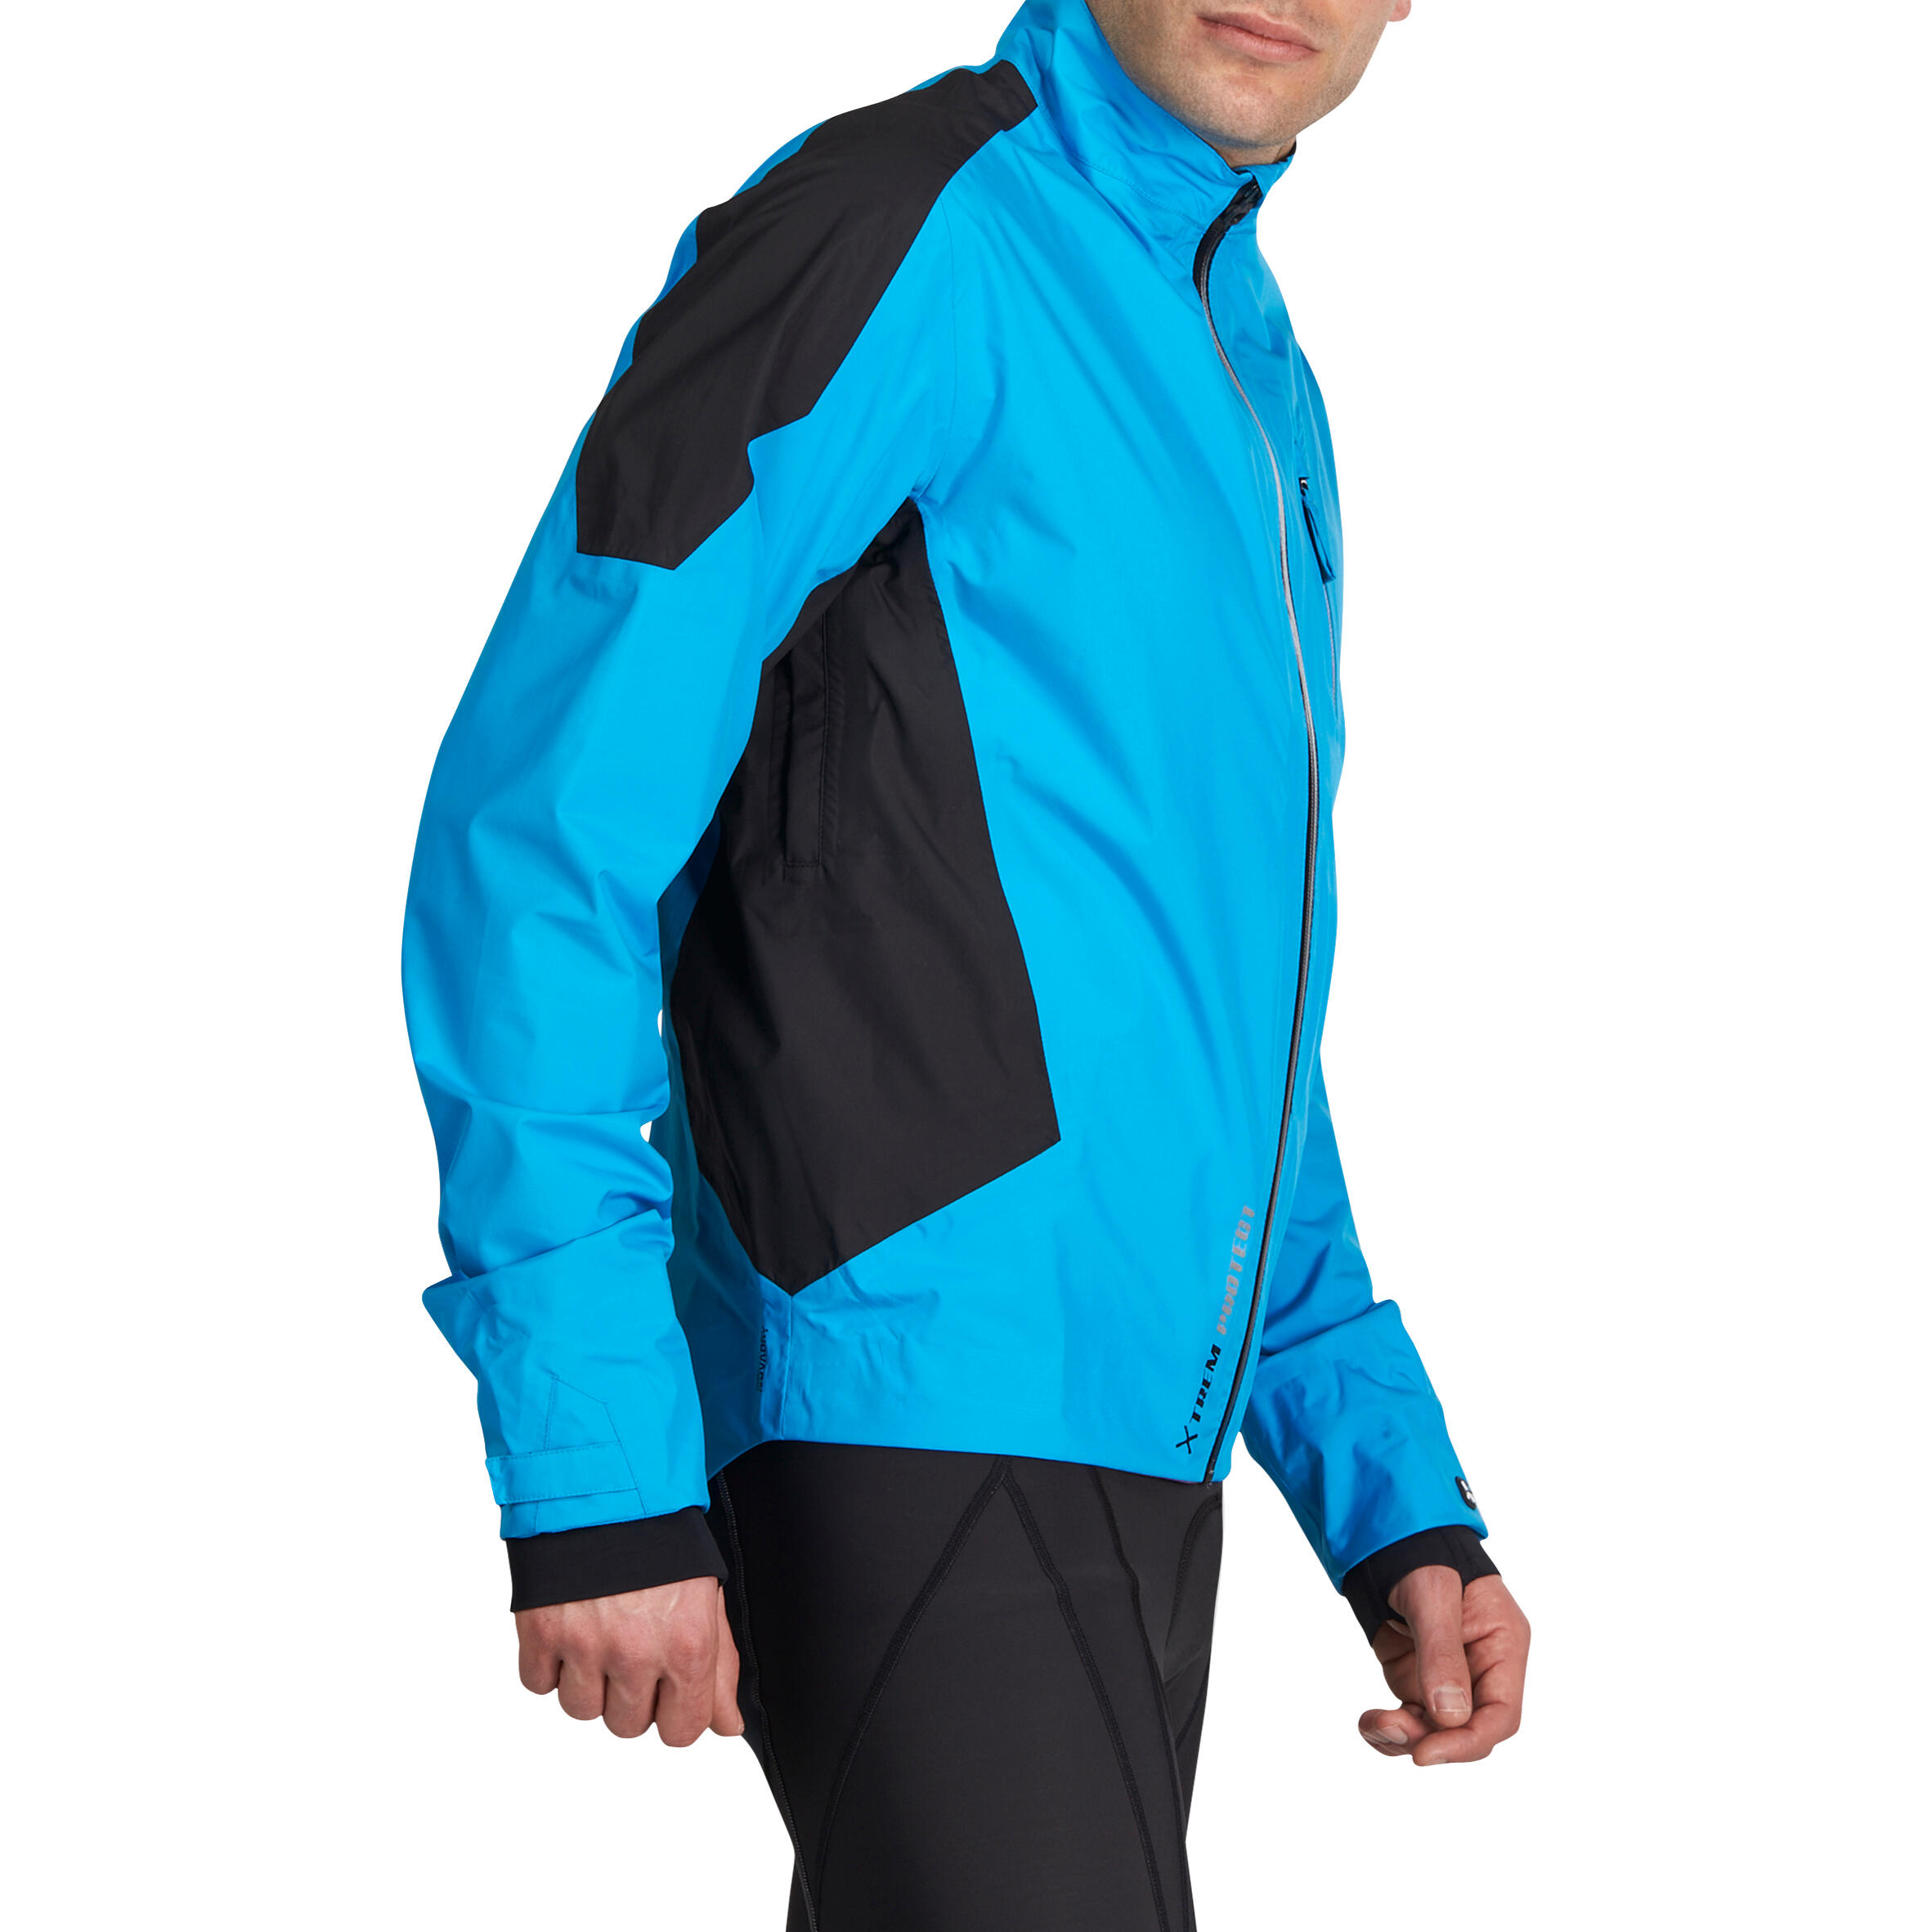 900 Mountain Biking Rainproof Jacket - Blue/Black 3/20